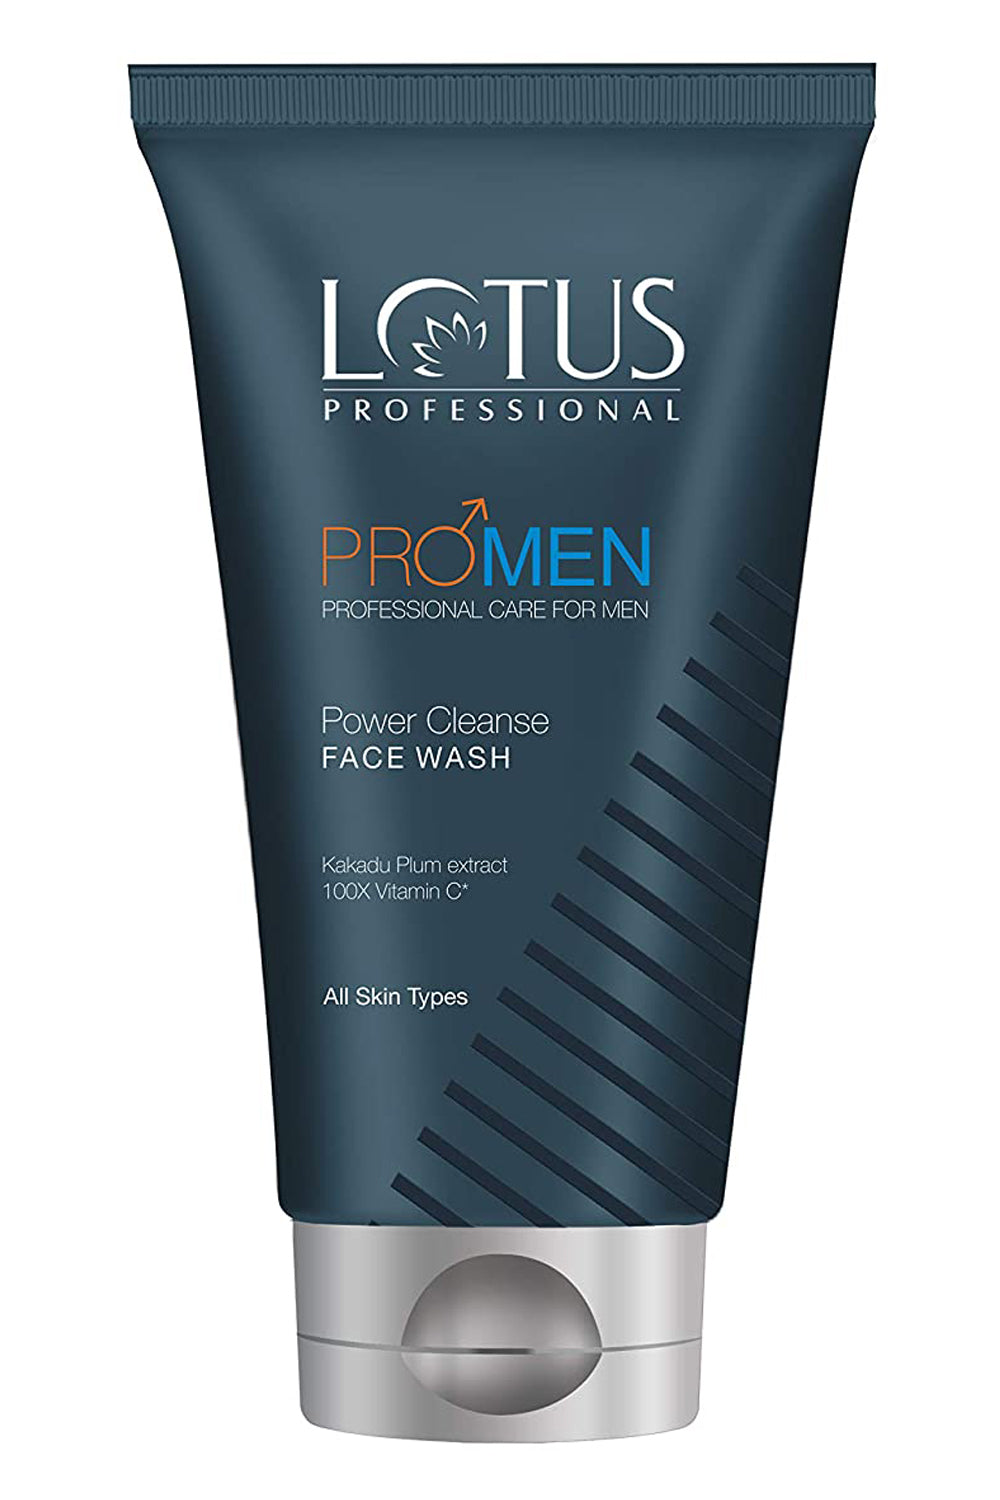 Lotus Promen Power Cleanse Face Wash 100ml - Roop Darshan